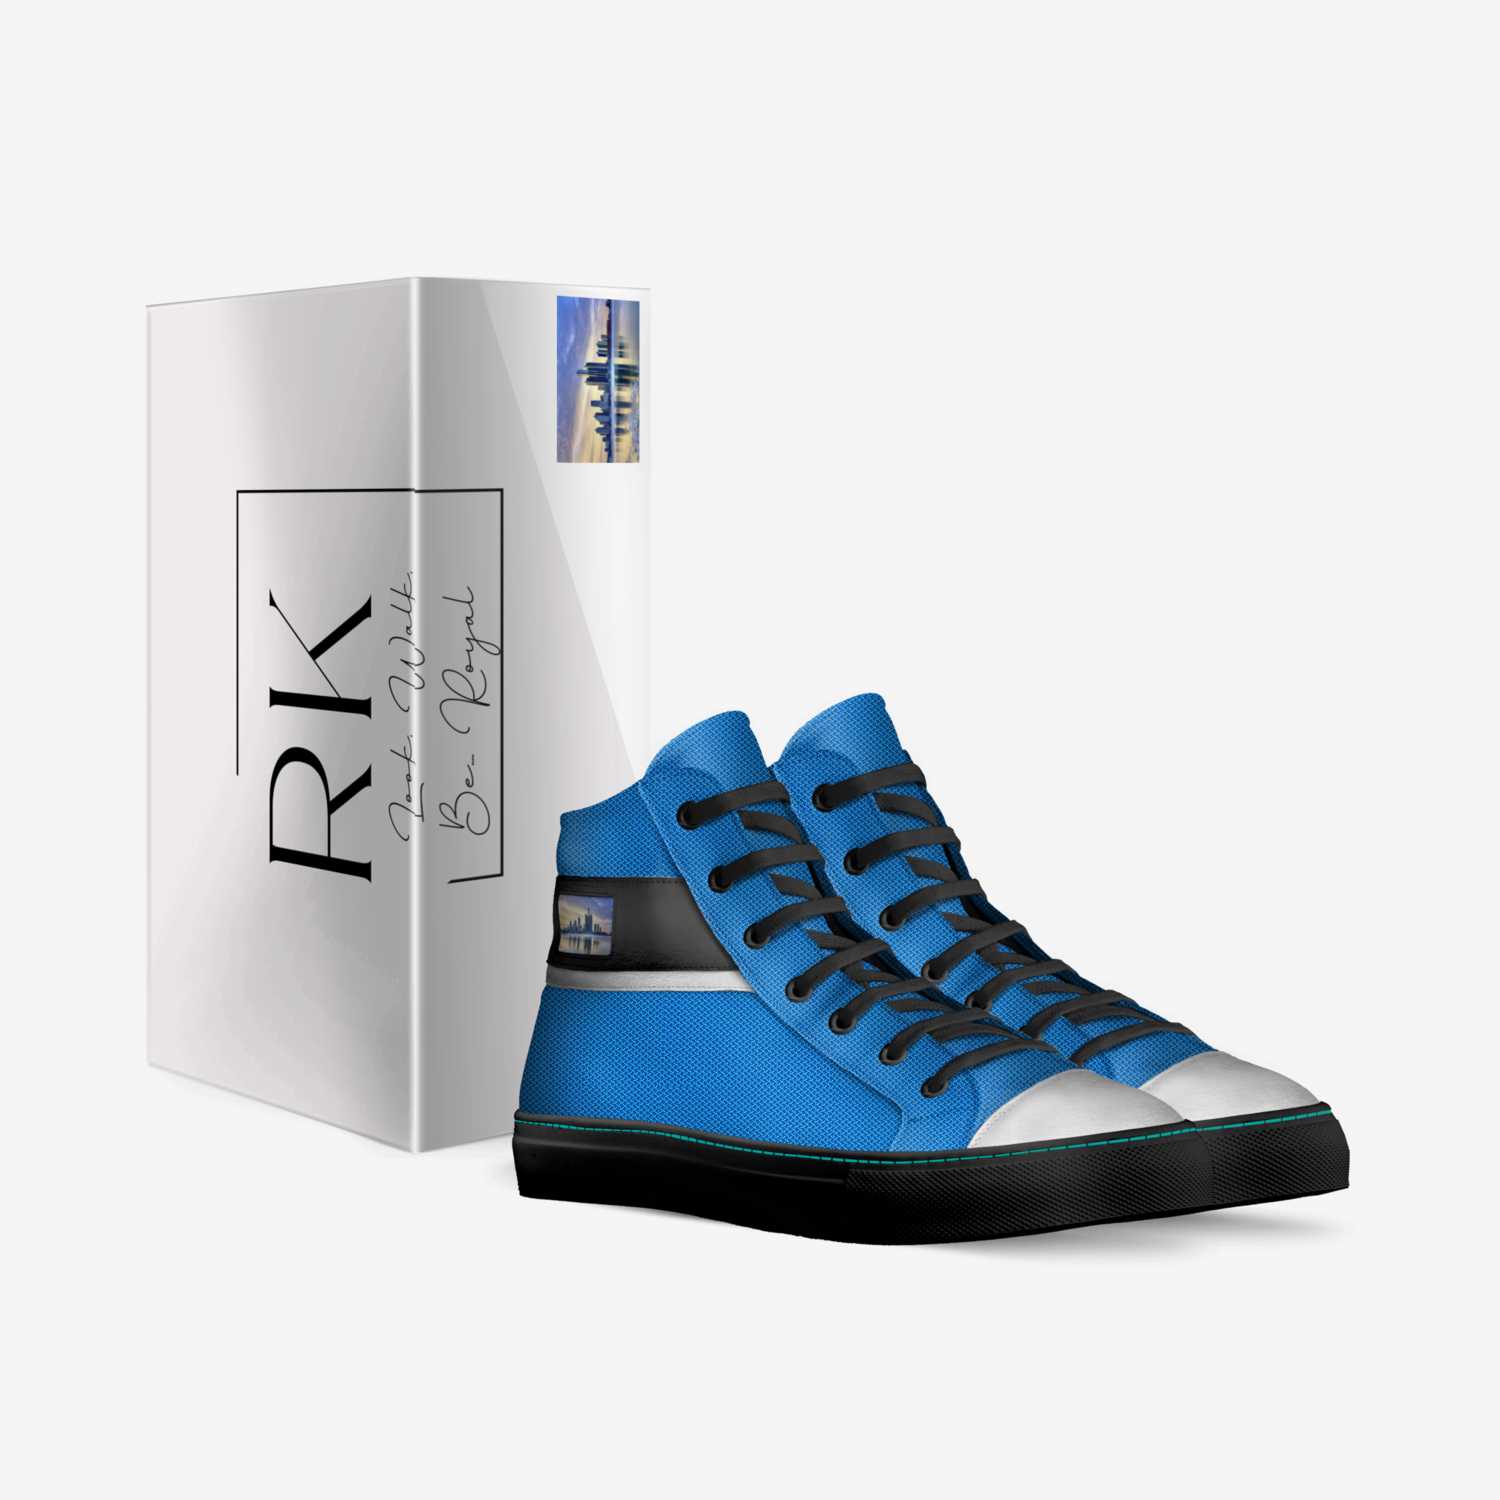 Royal Kingdom 313s custom made in Italy shoes by Rauh Karim | Box view